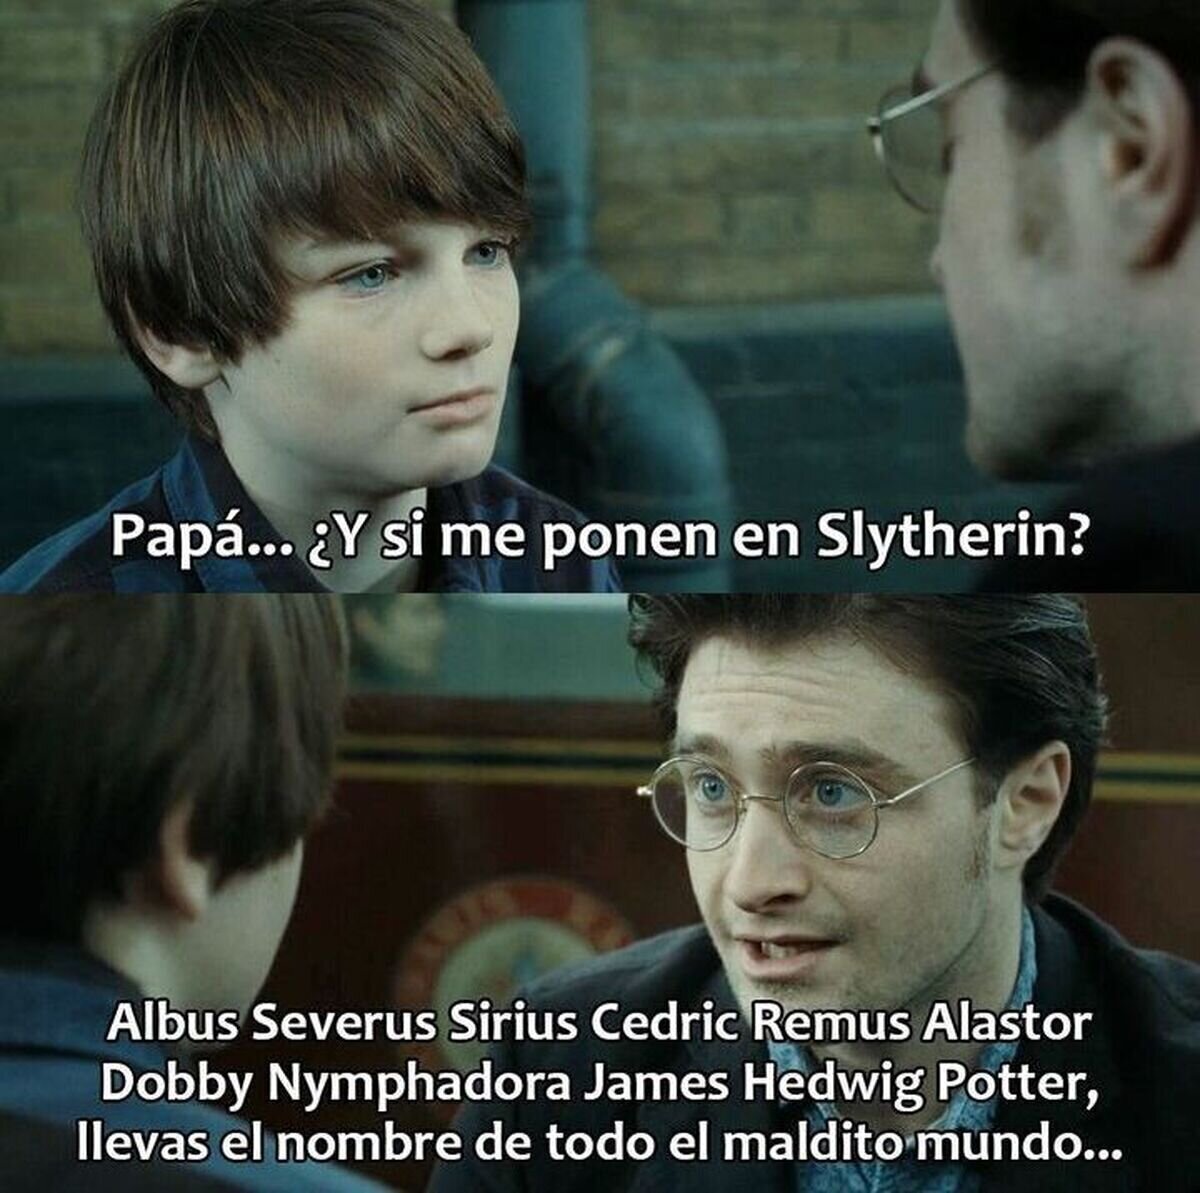 Pero le decimos Harry Potter Jr para abreviar